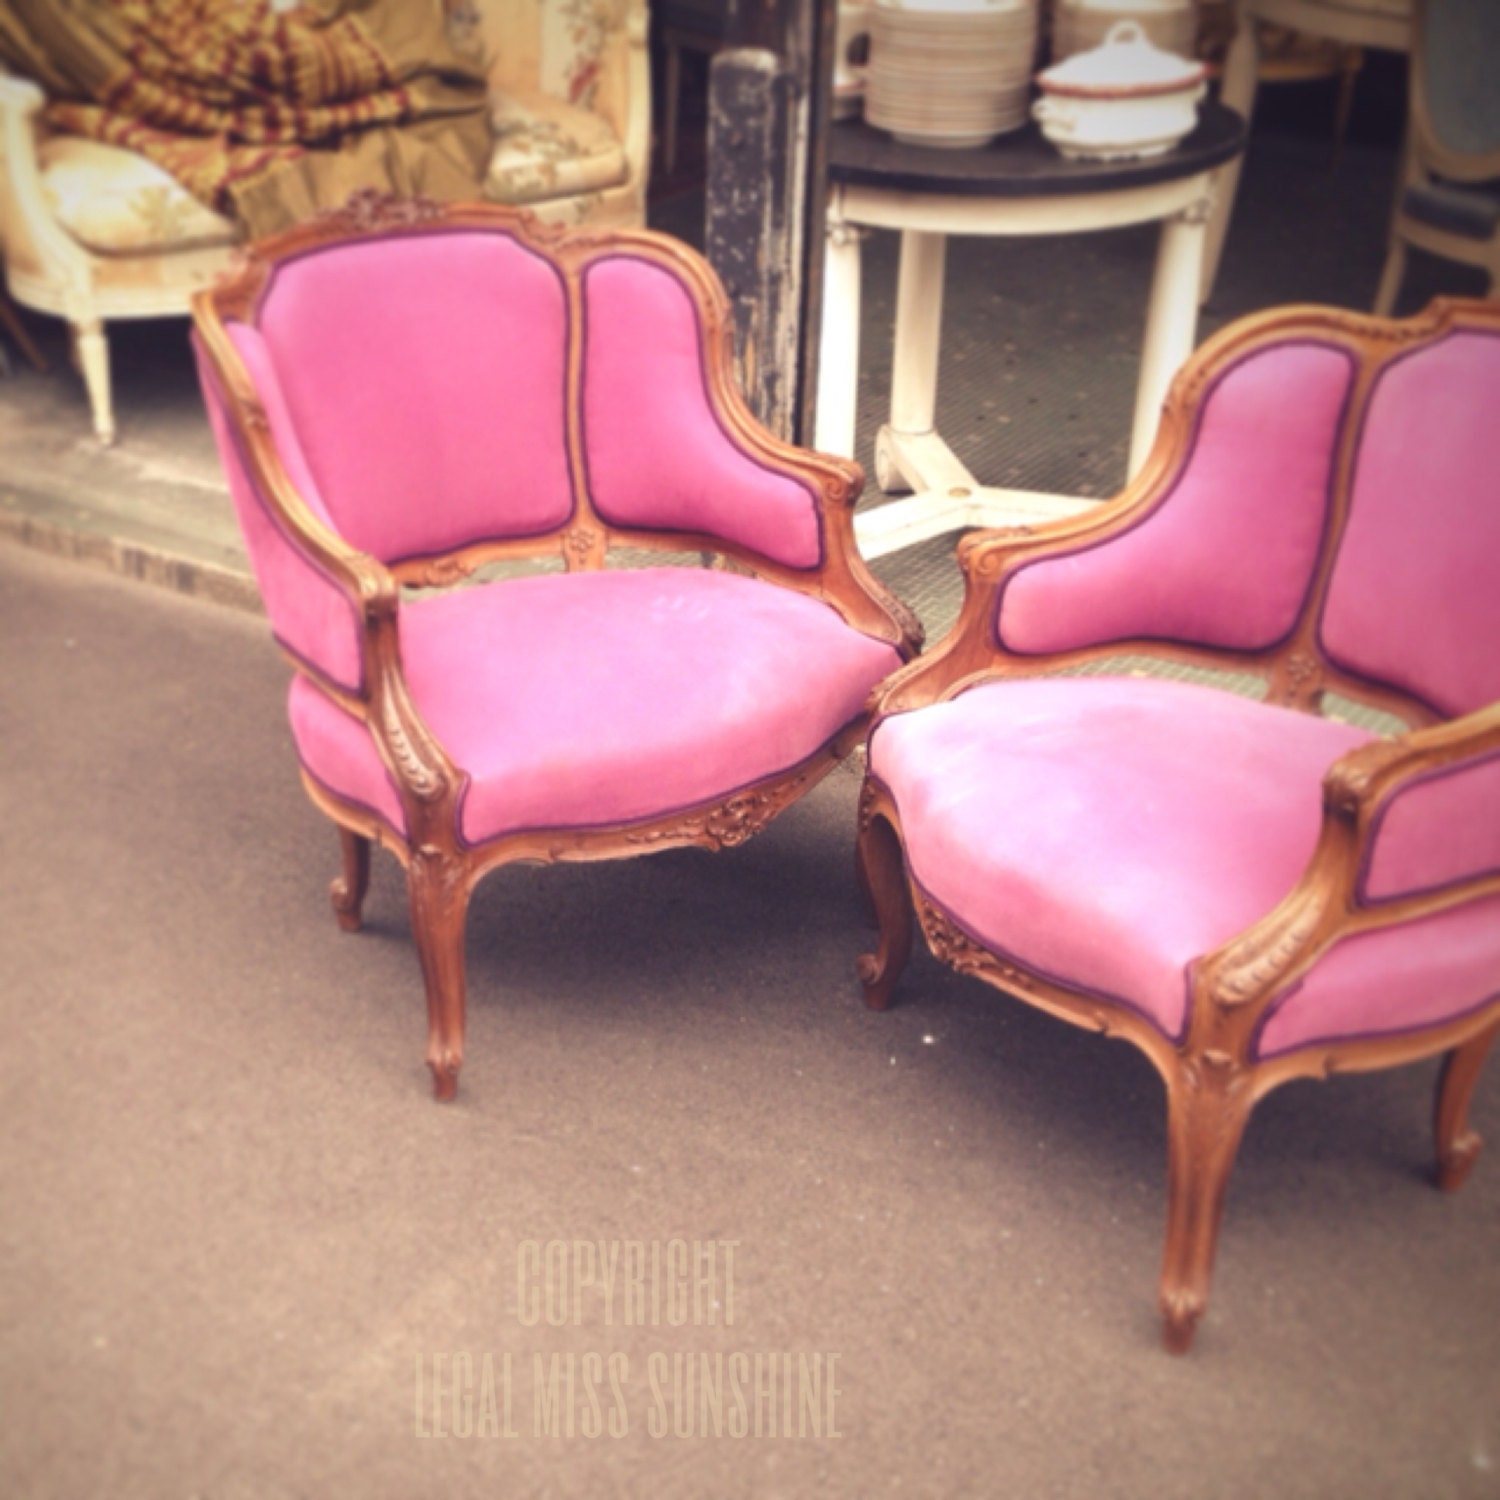 paris flea market photography: 5x5 of two amazing pink chairs - LegalMissSunshine